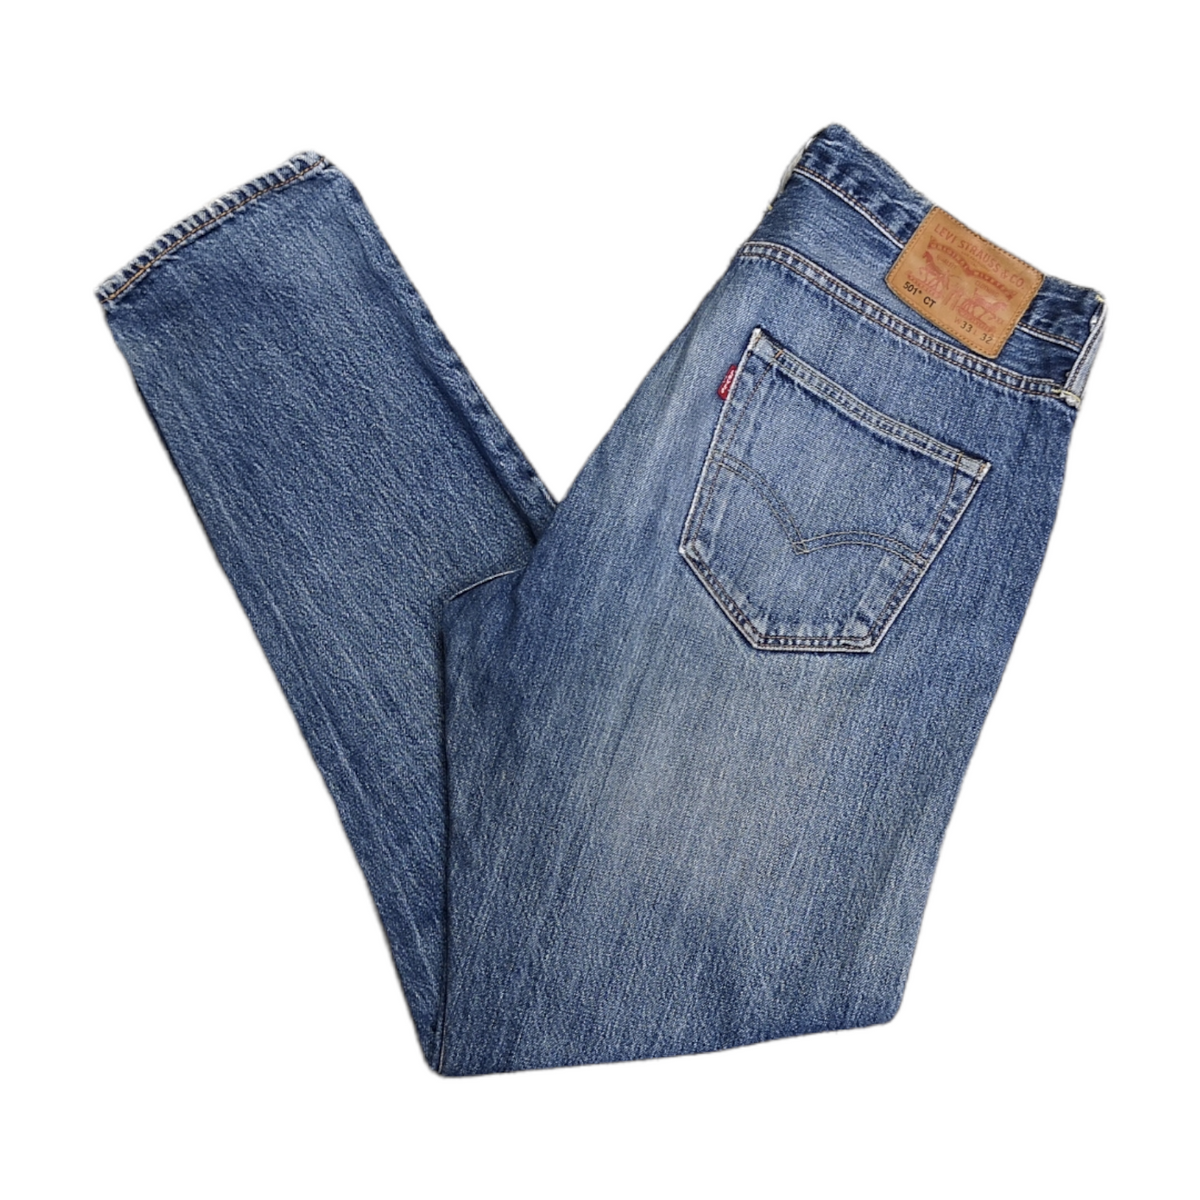 Levi's 501's CT Denim Jeans - Size W34 L32